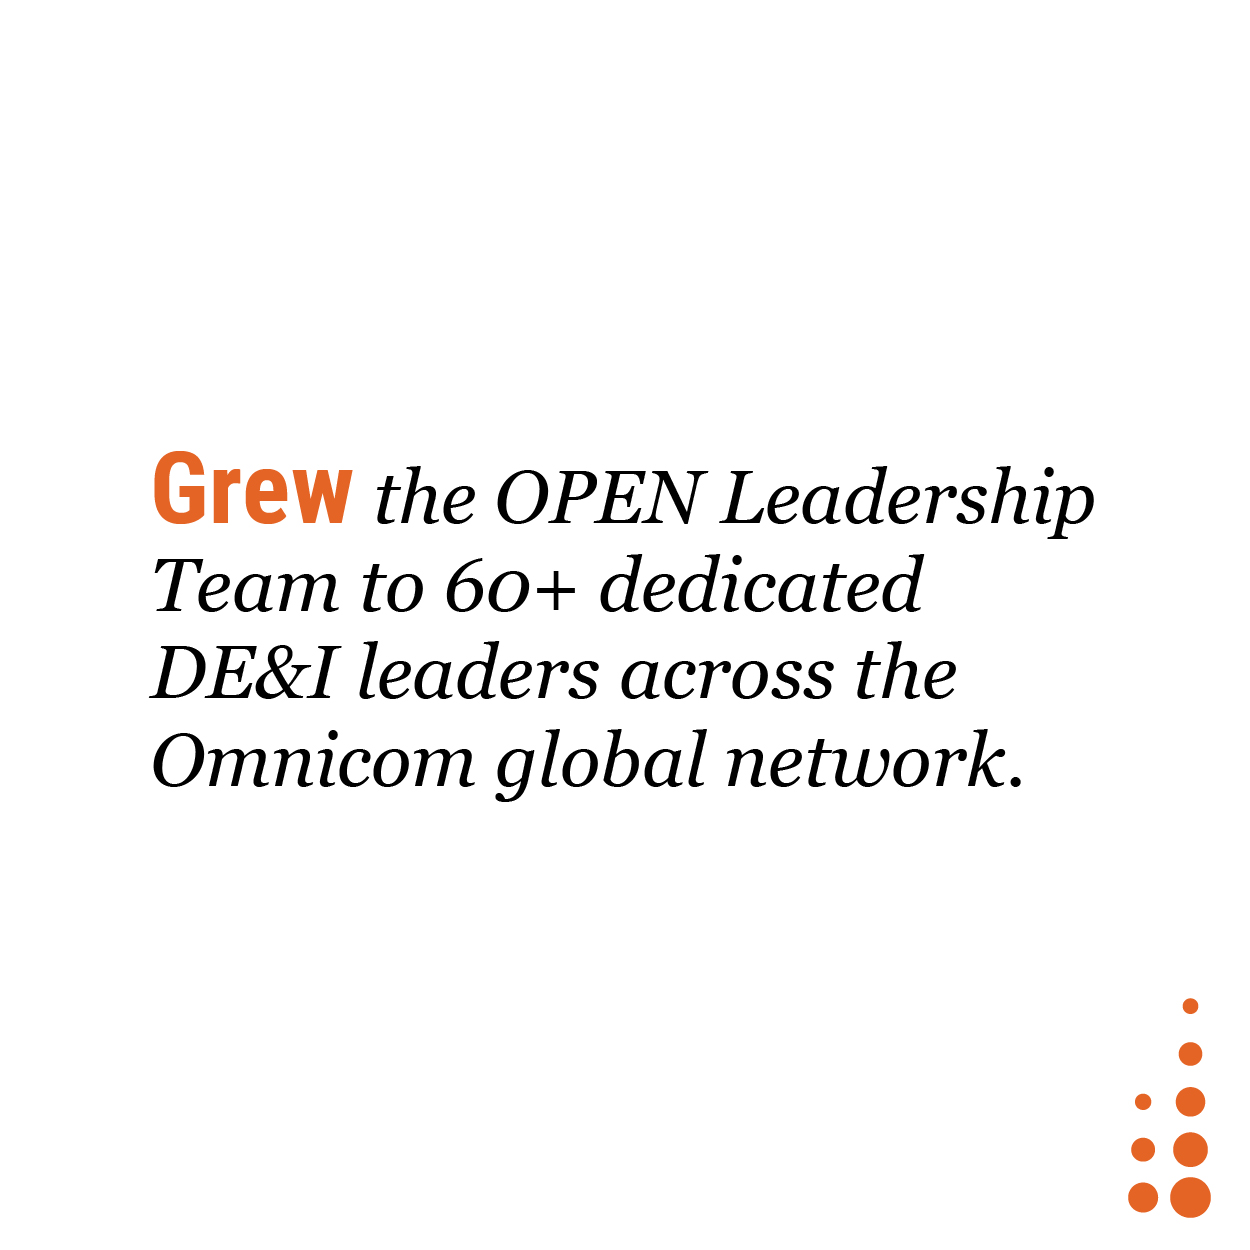 Grew the OPEN Leadership Team to 60+ dedicated DEI leaders across the Omnicom global network.